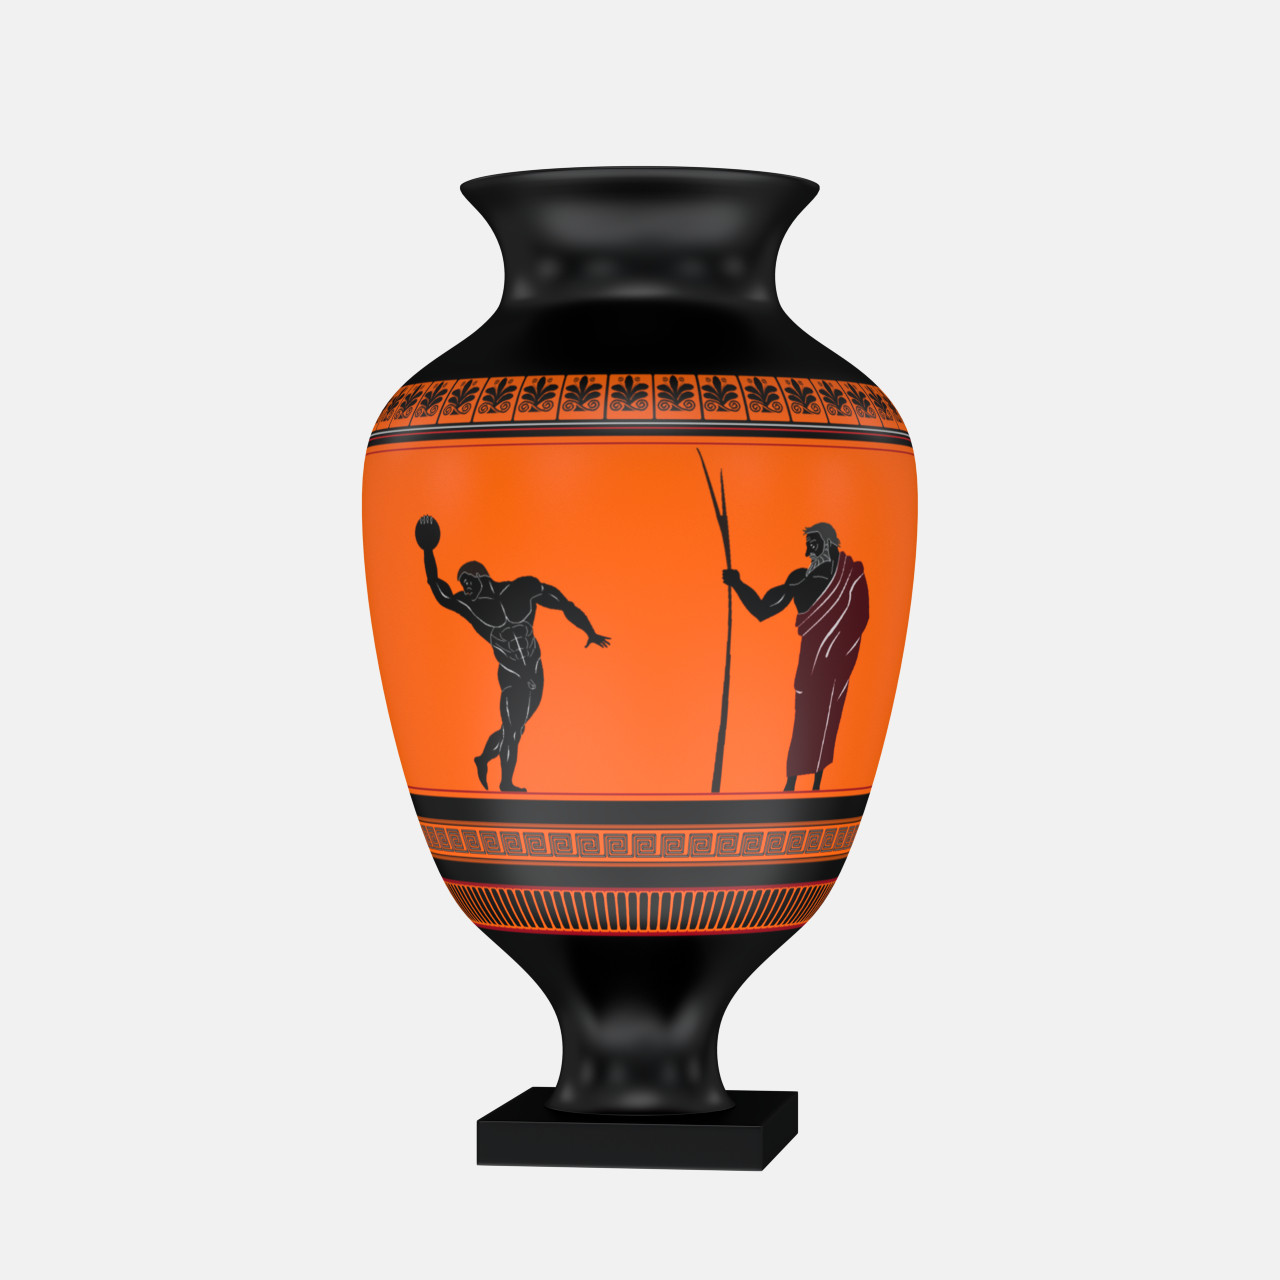 Greek Vase 1 (unwrapped, text